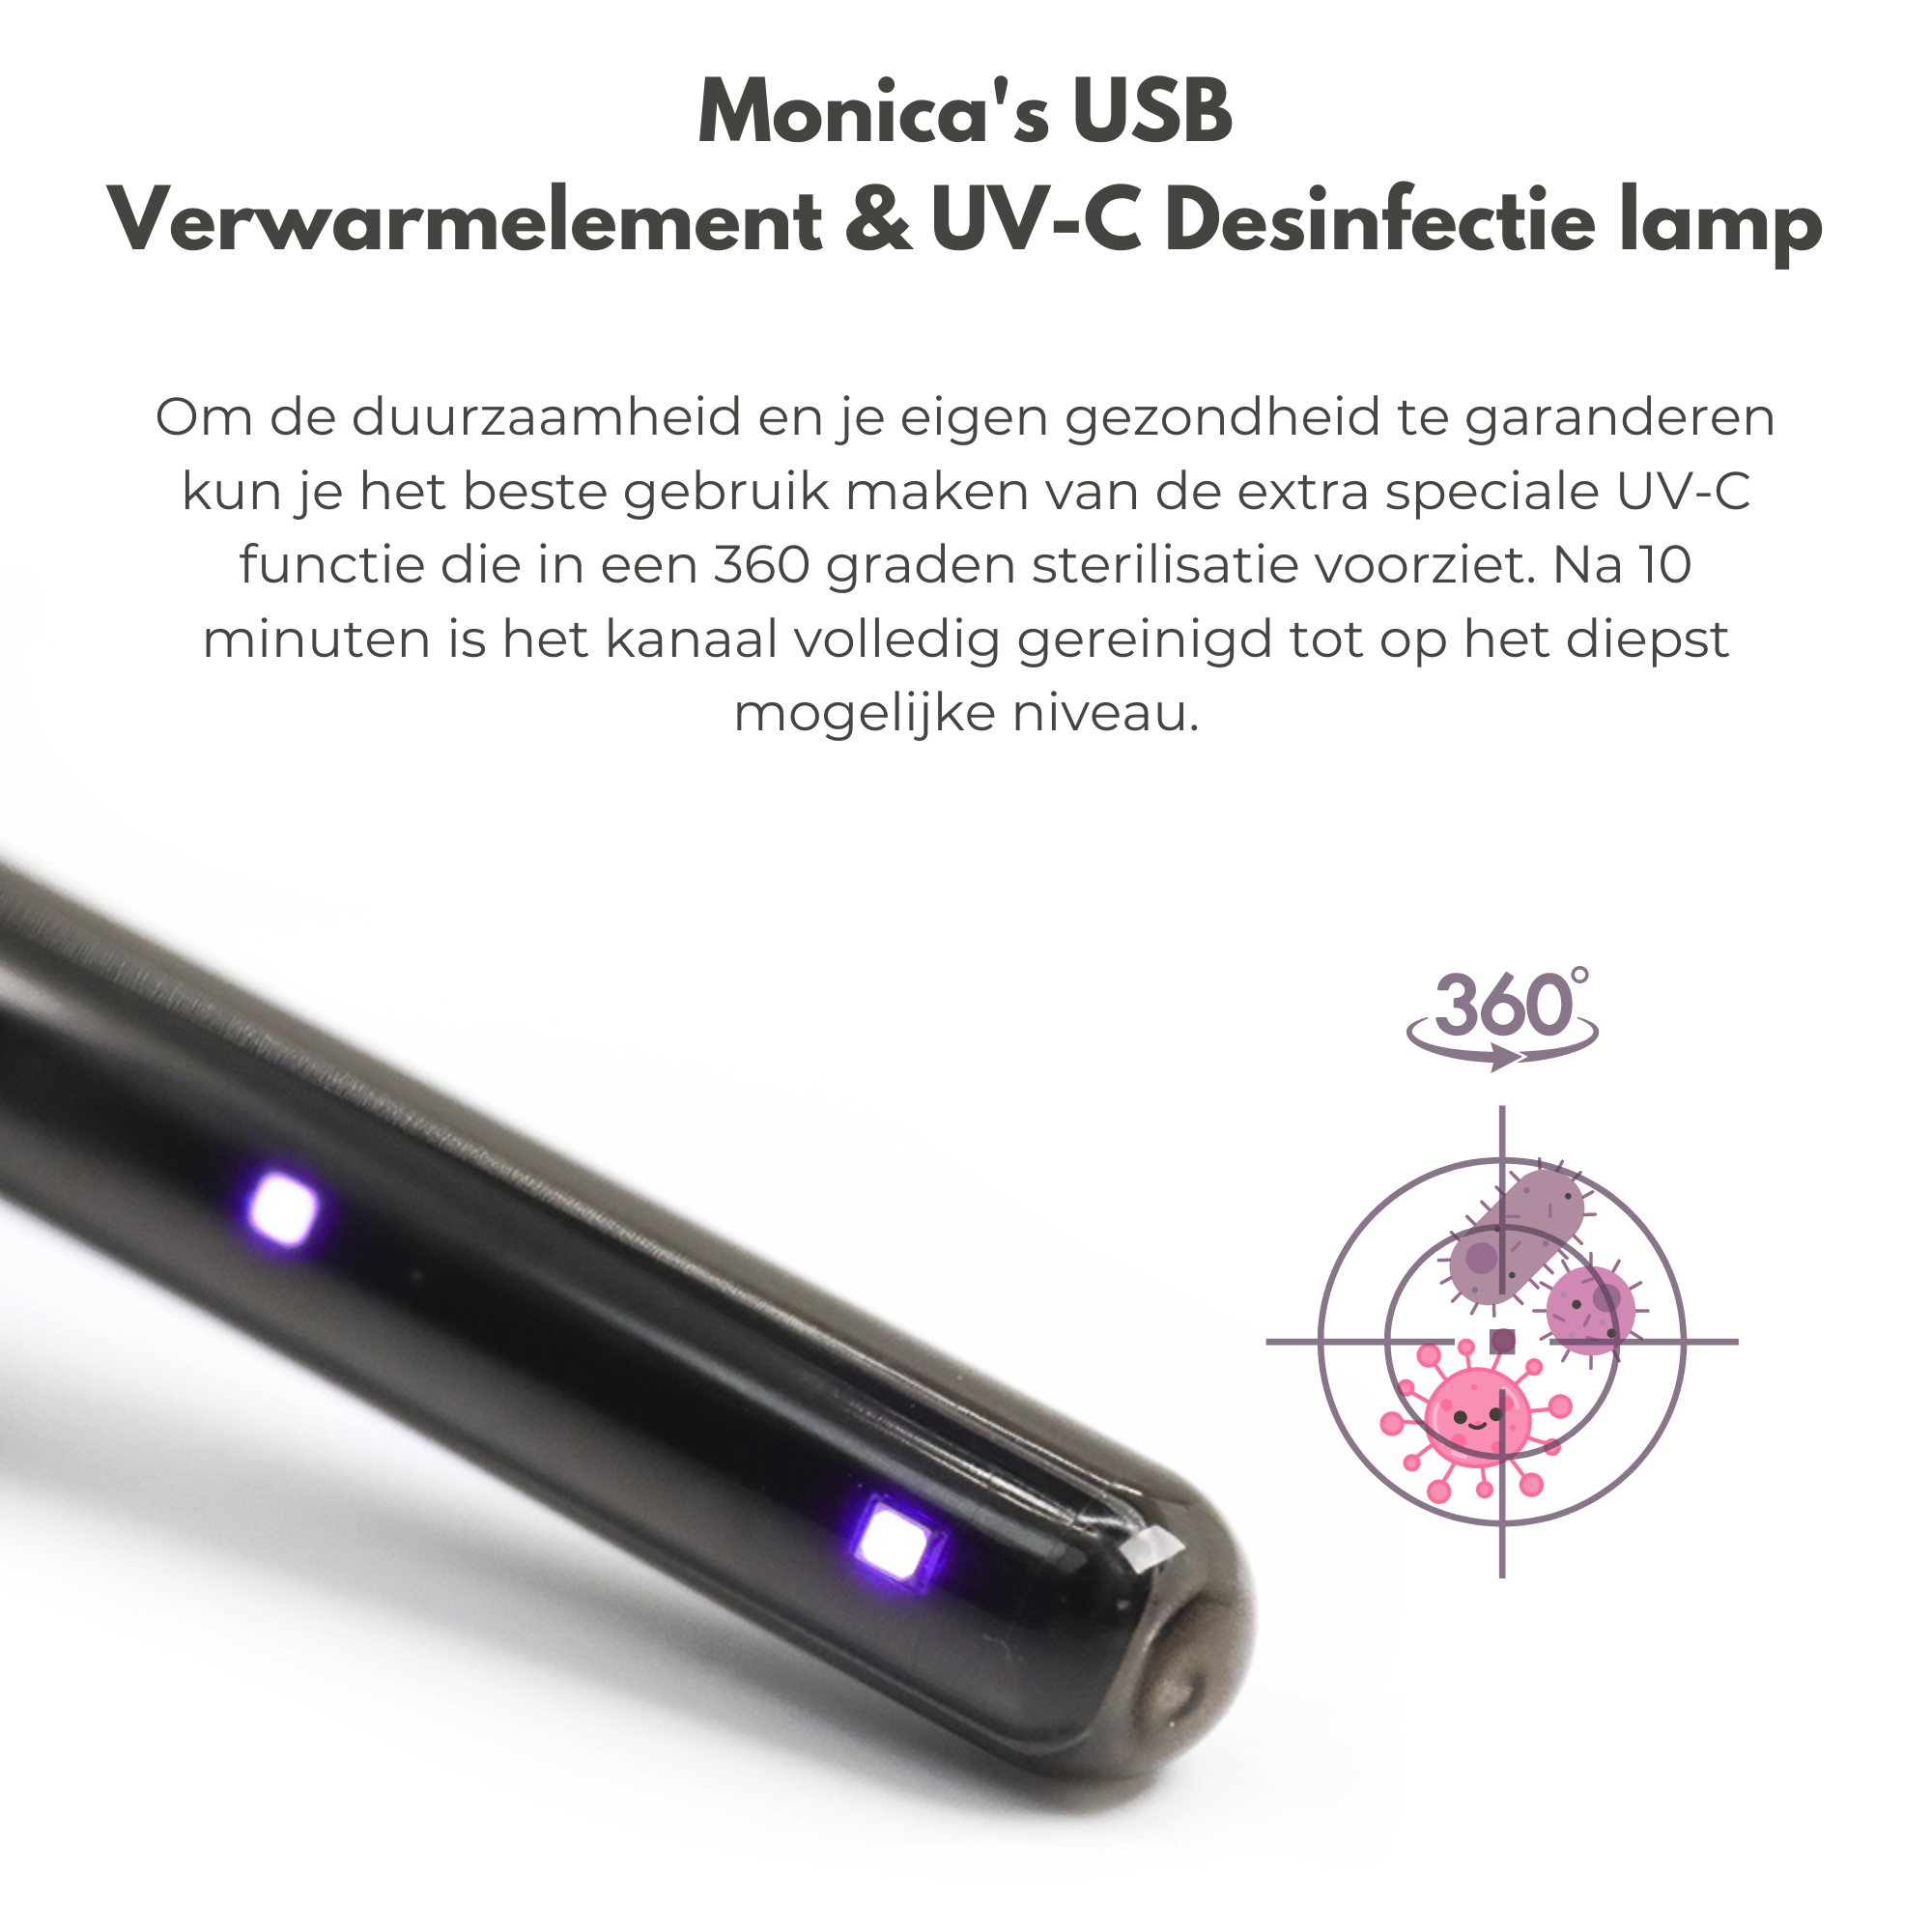 USB Verwarm & Desinfectie Lamp - Monica Moments 